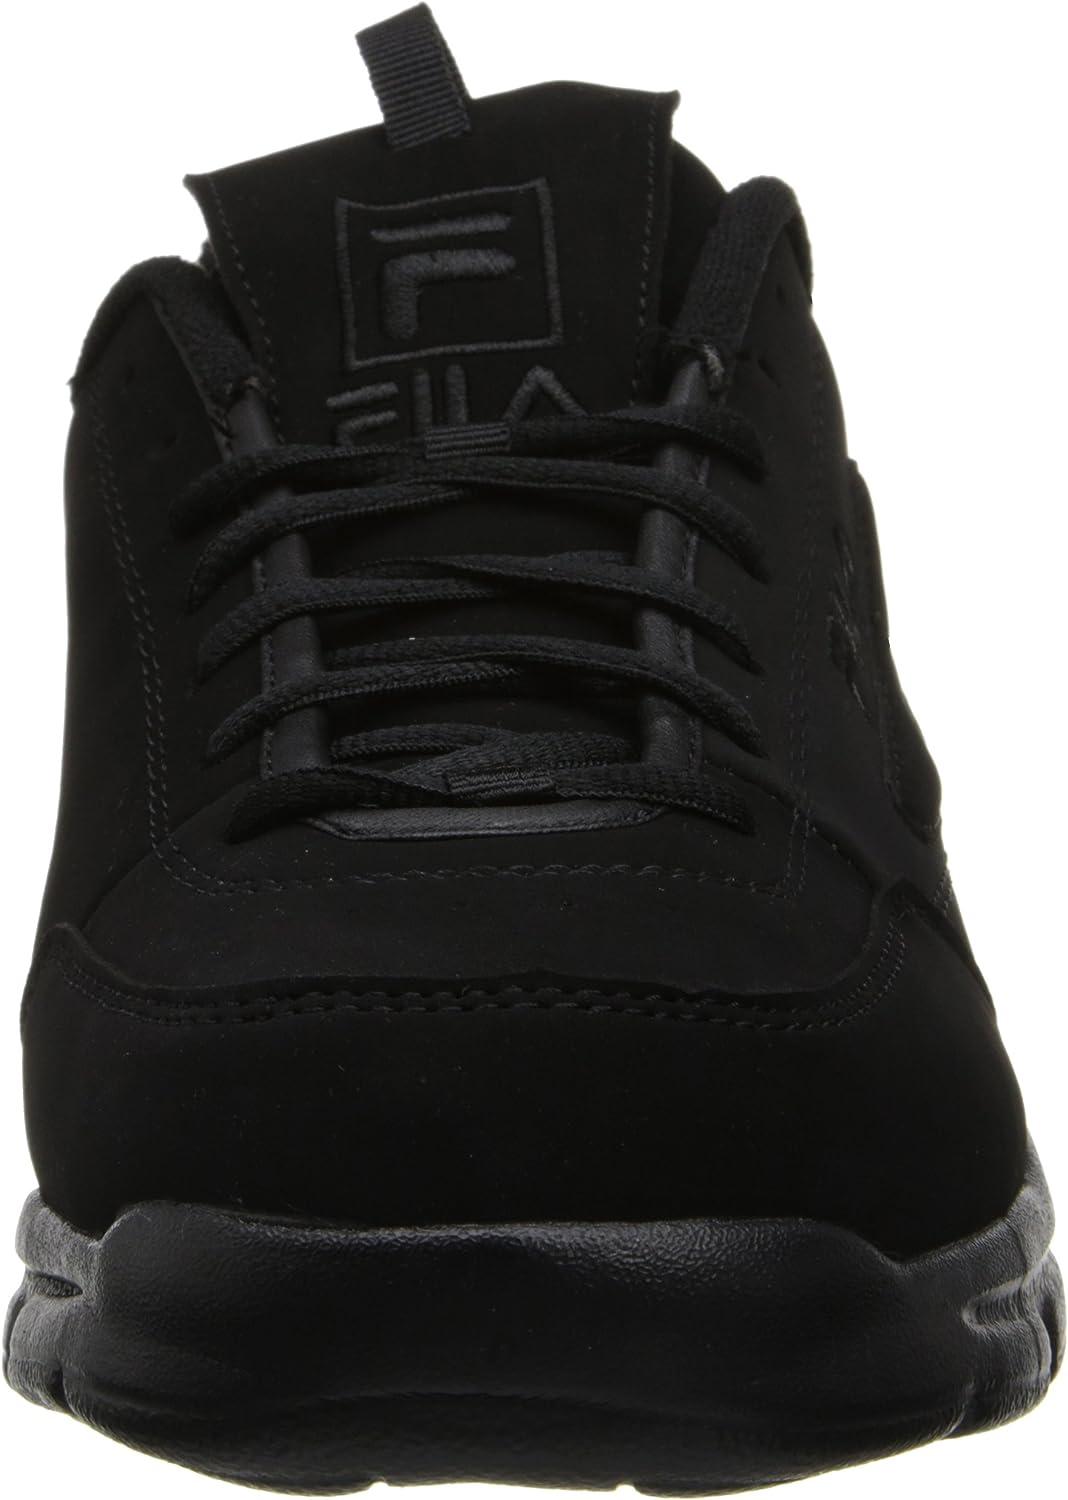 Buy Fila Men DIO BLK/WHT Casual Shoes at Amazon.in